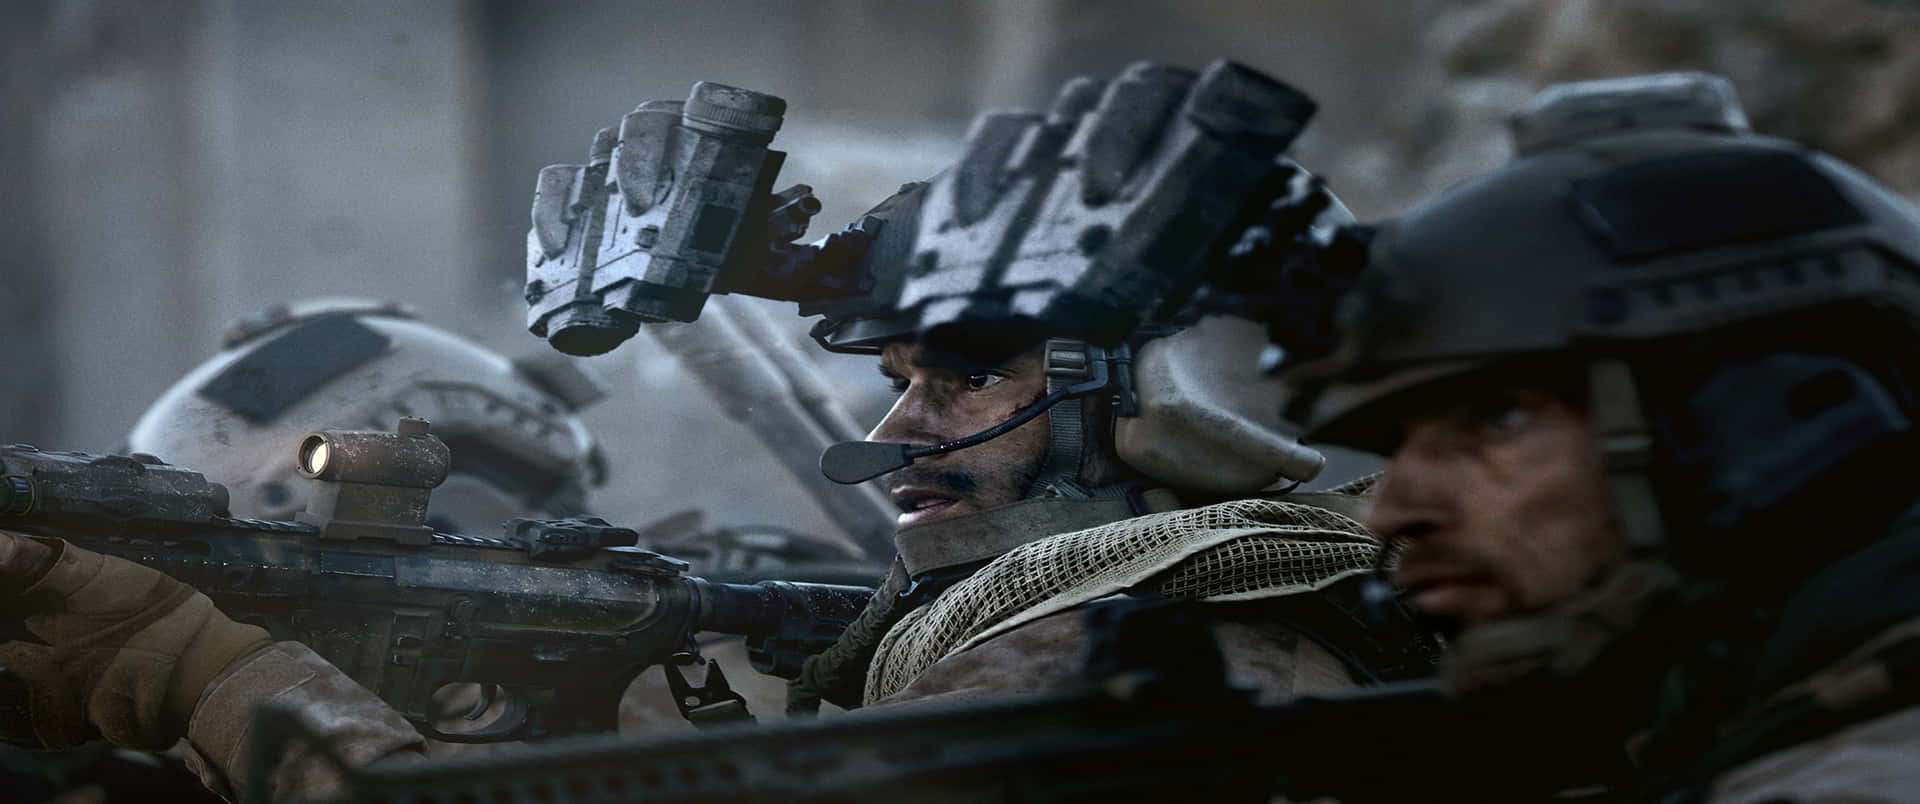 Närbildav Alex Keller 3440x1440p Call Of Duty Modern Warfare Bakgrund.